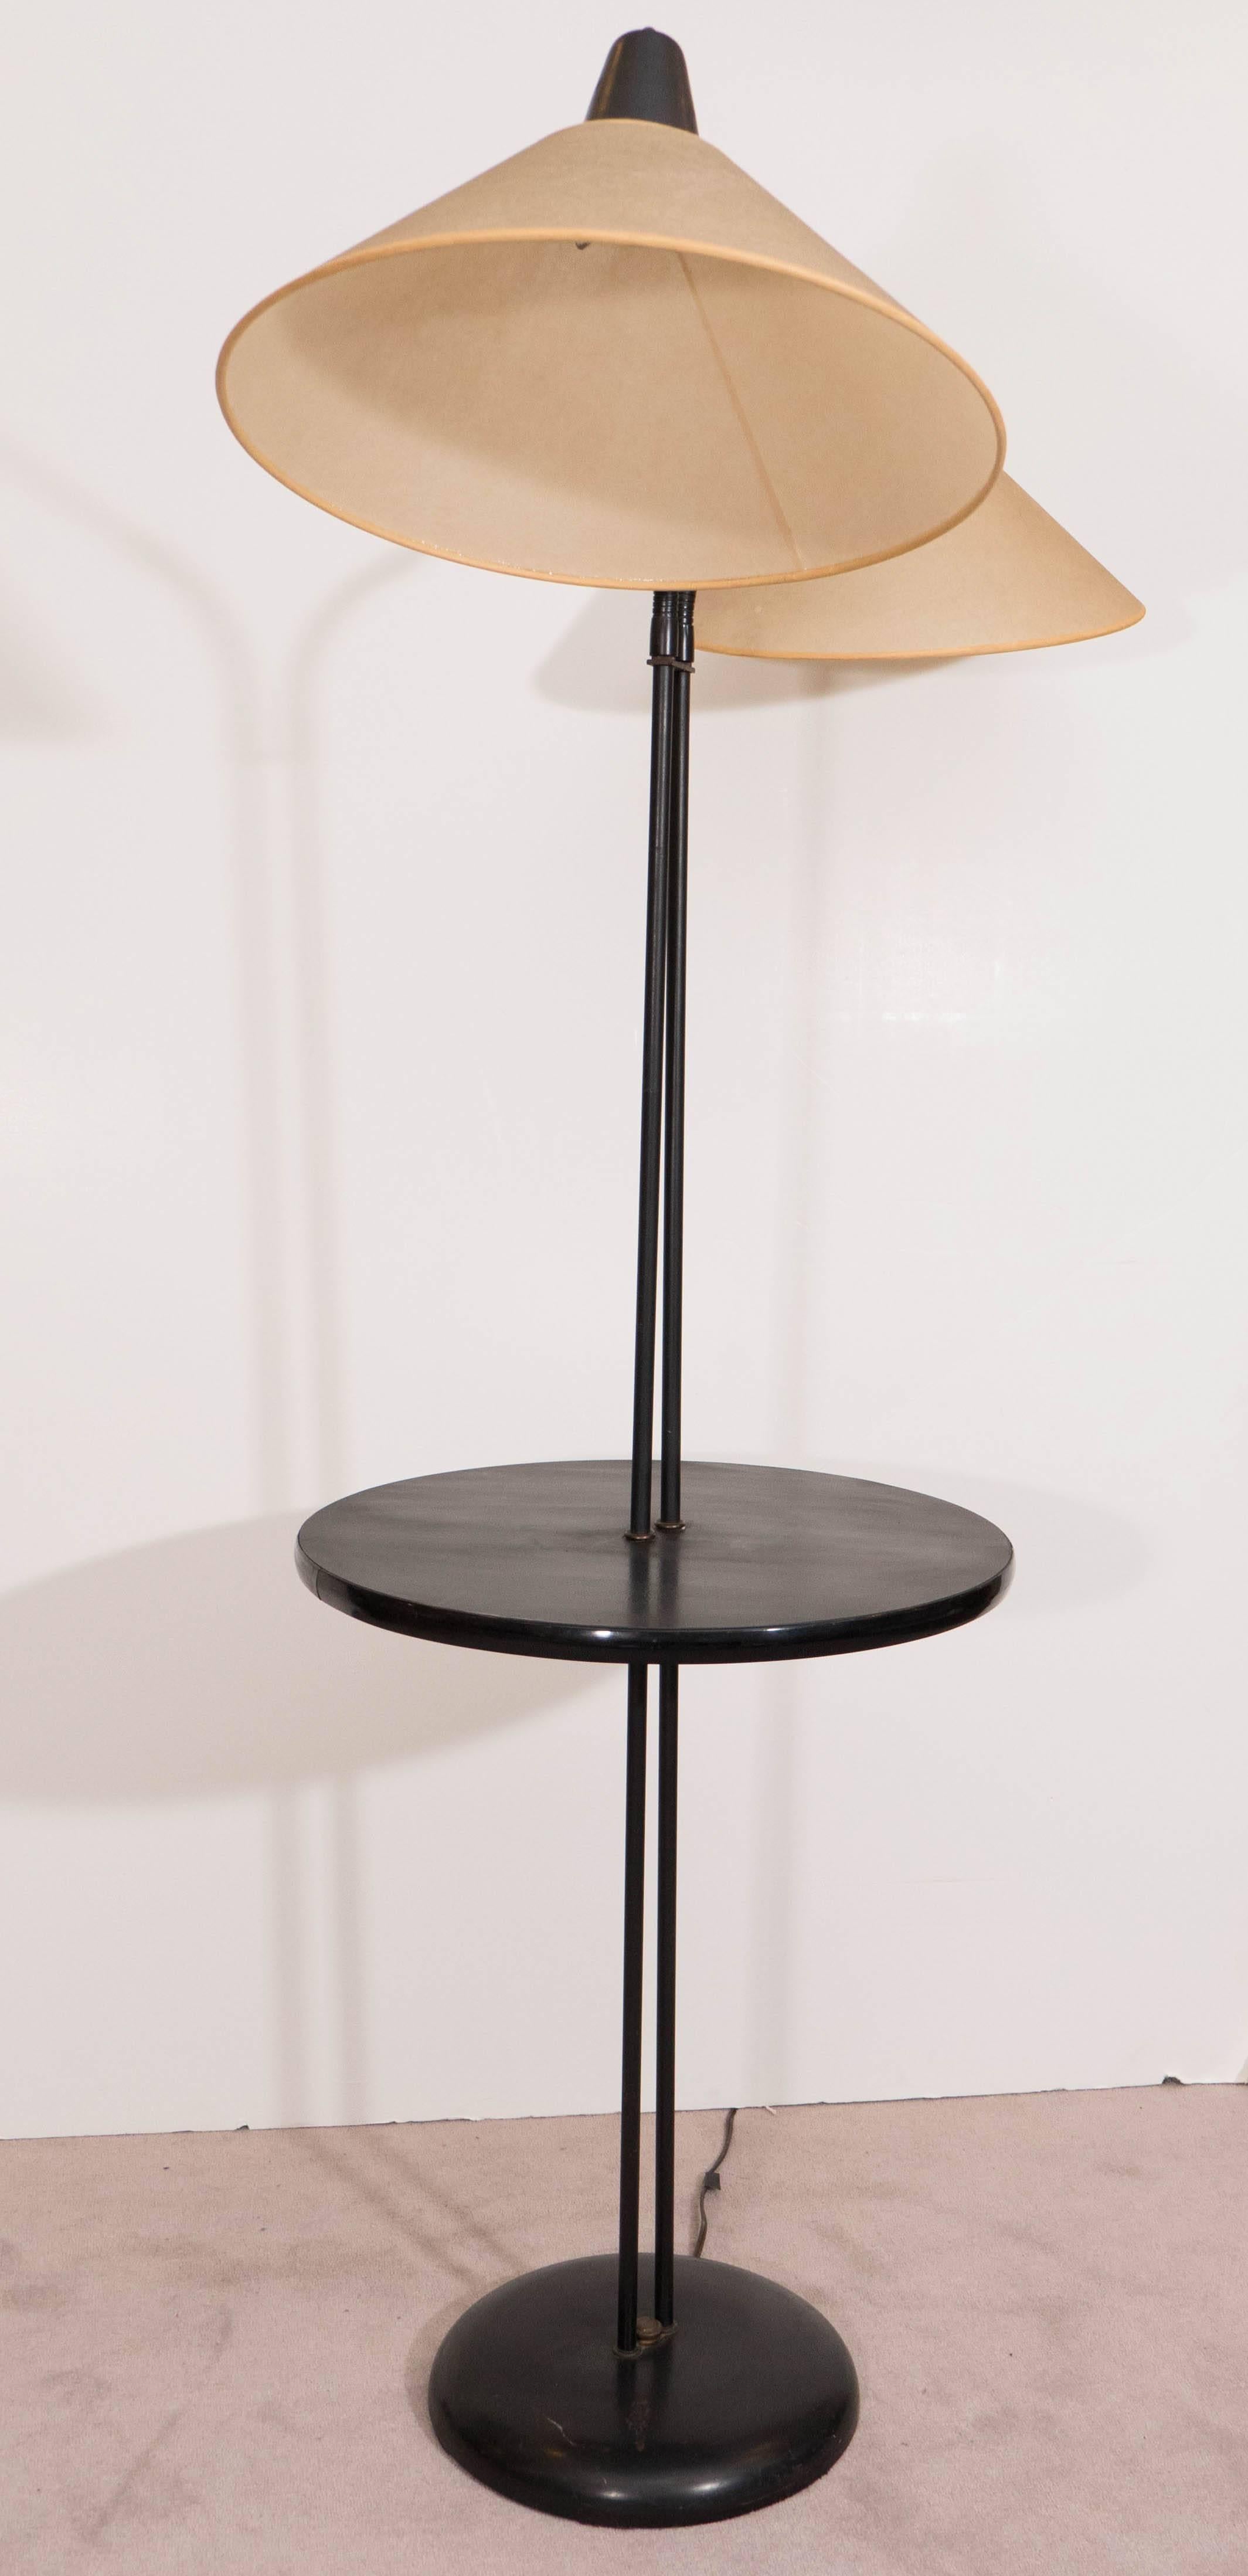 Enameled Midcentury Dual Light Gooseneck Floor Lamp with Table